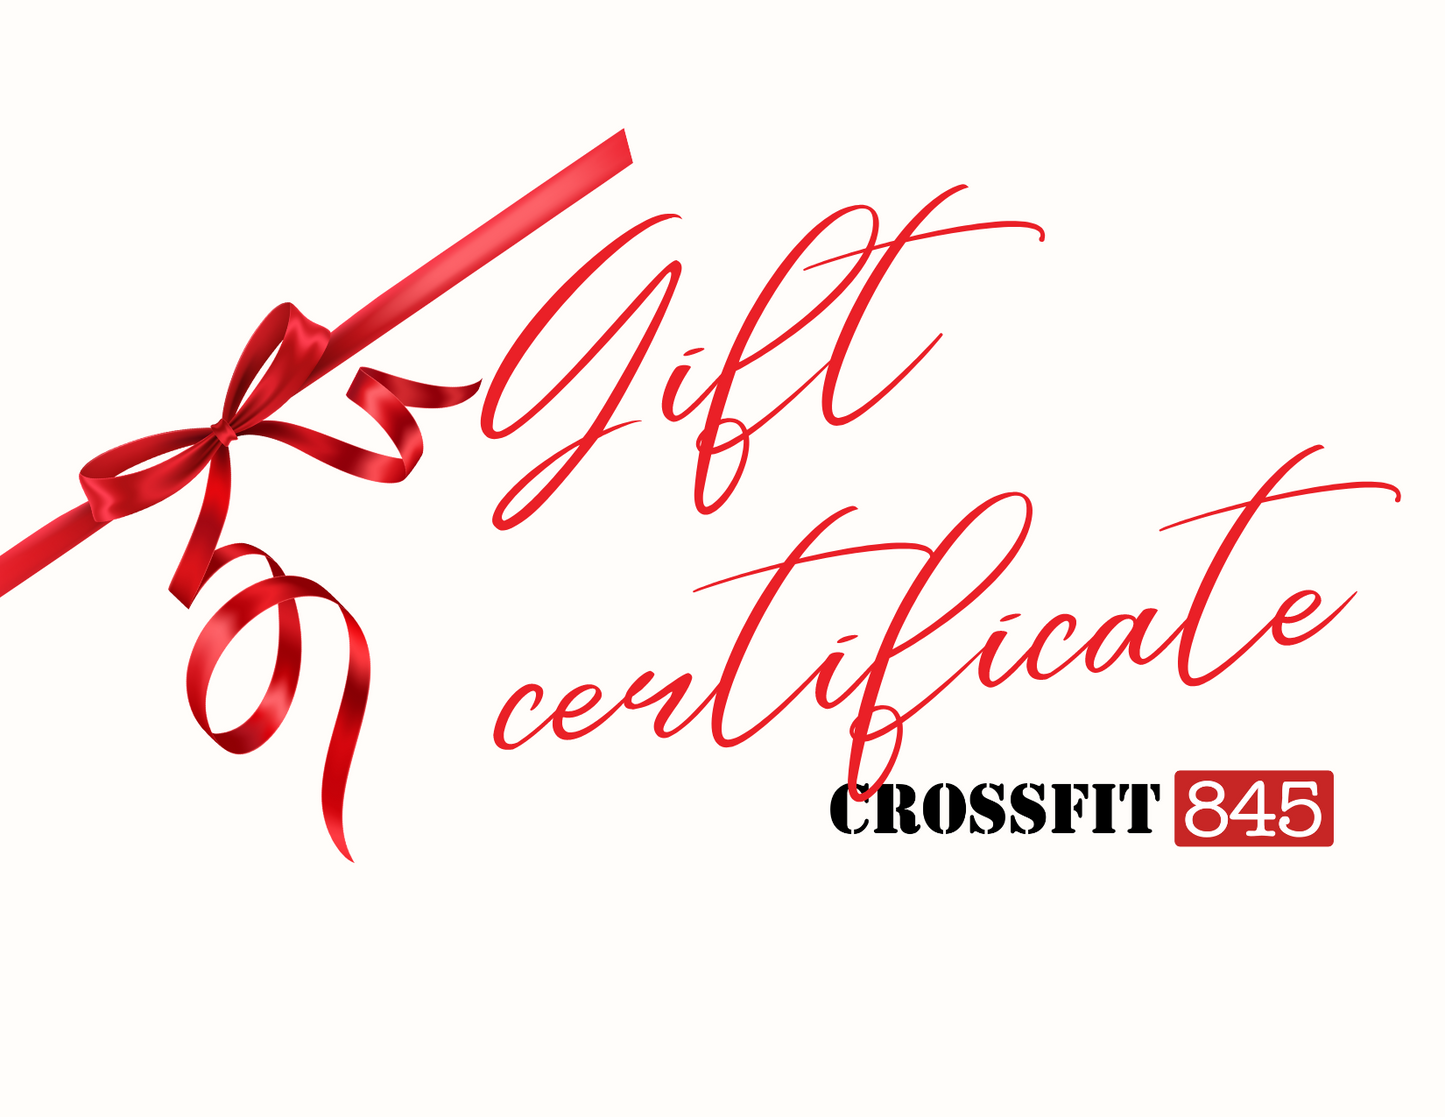 CrossFit 845 Gift Certificate